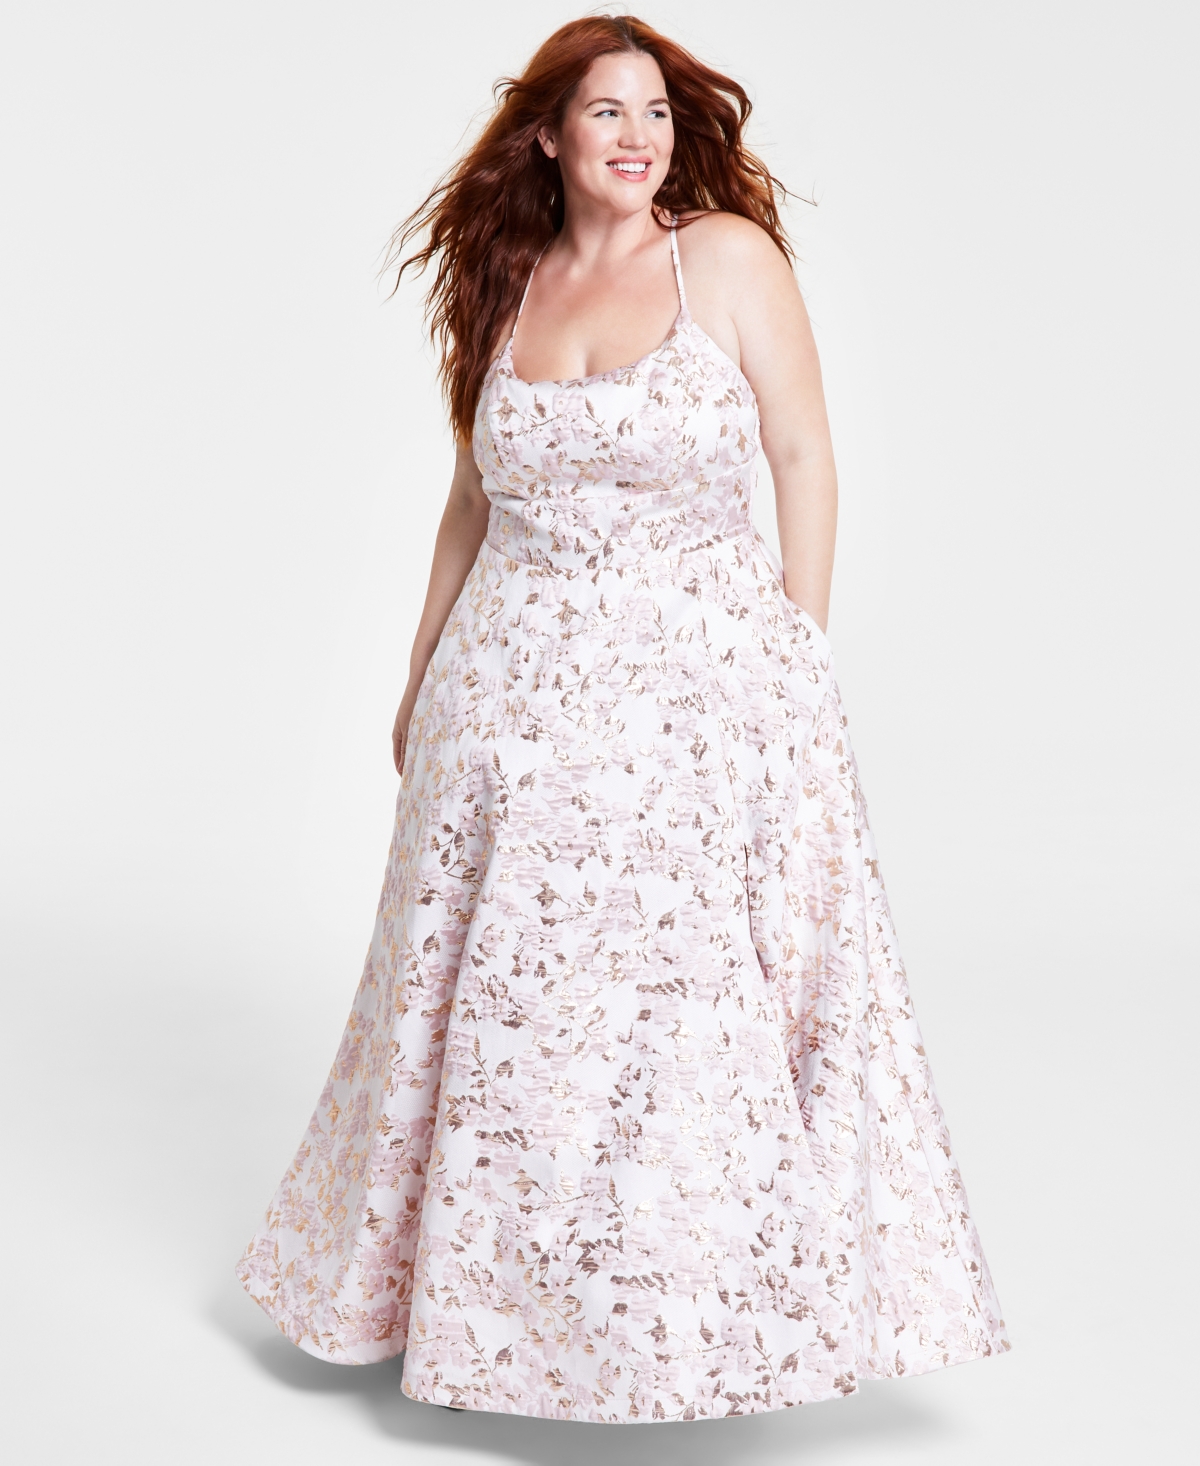 Trendy Plus Size Metallic-Jacquard Sleeveless Gown - off-white/pink/gold